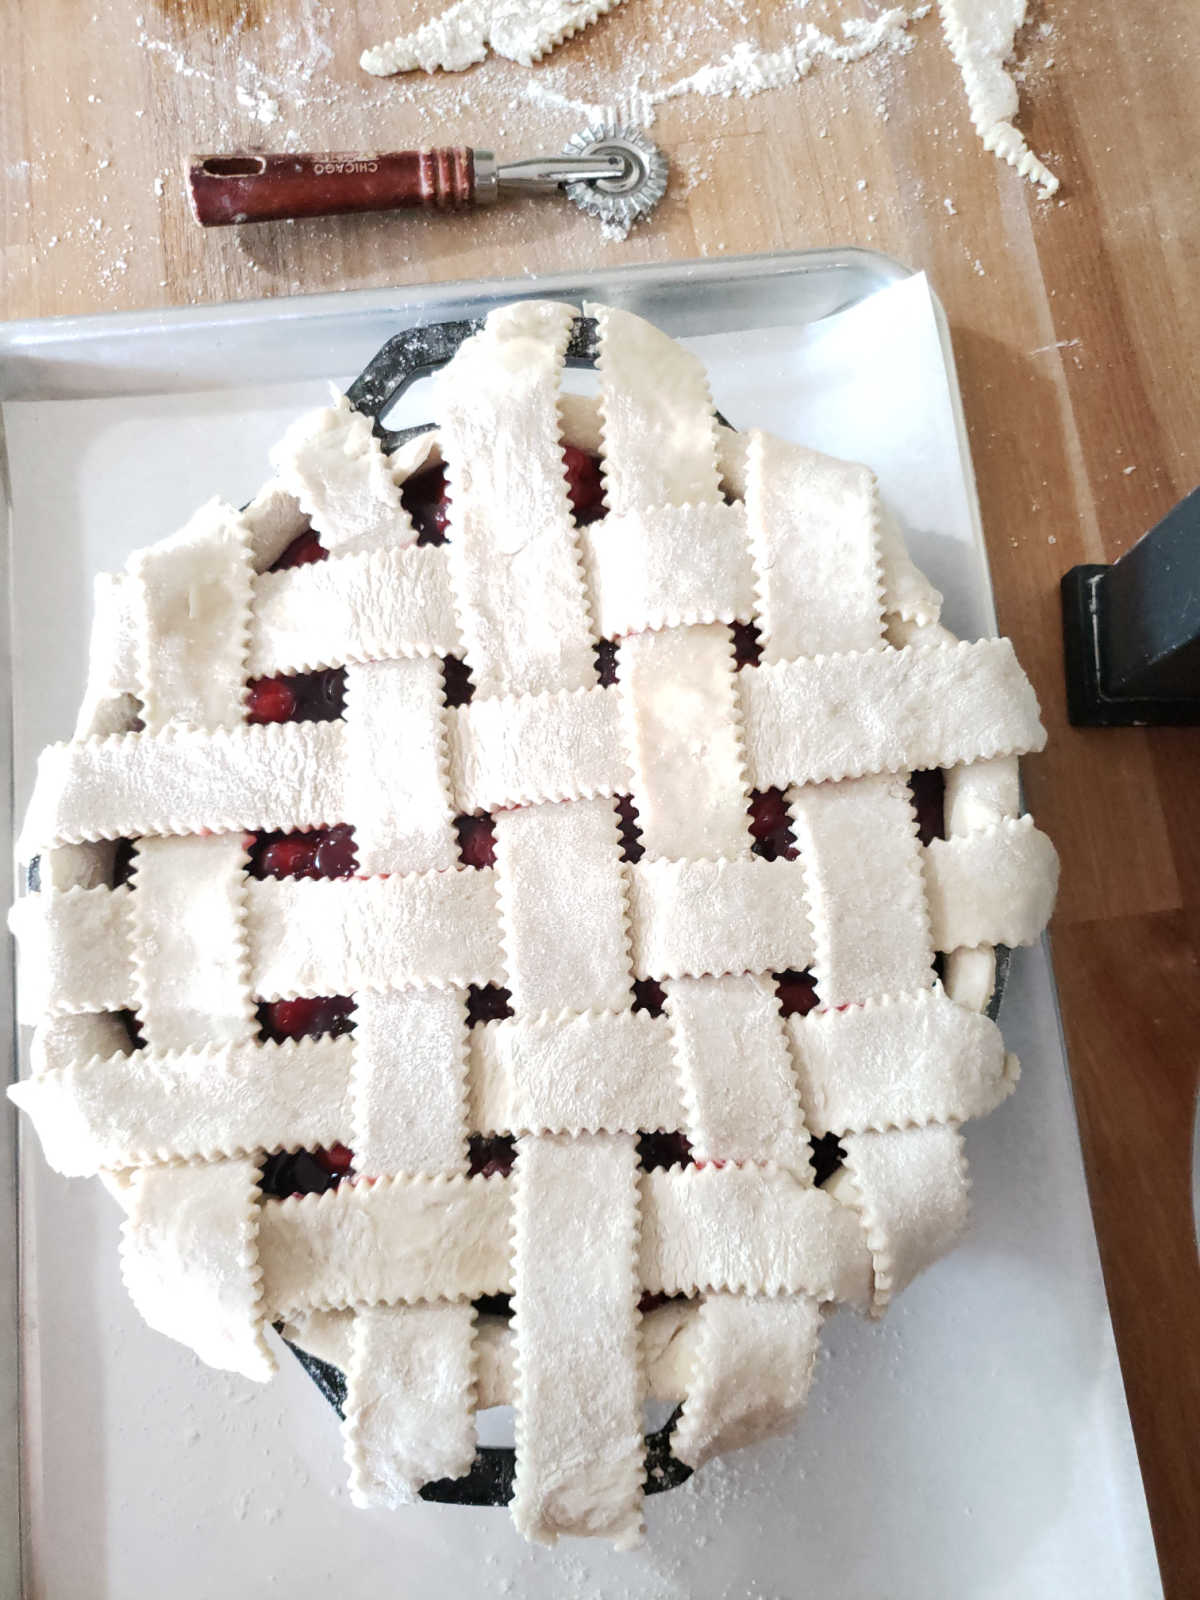 Unbaked cherry pie with lattice crust on metal baking pan on butcher block.